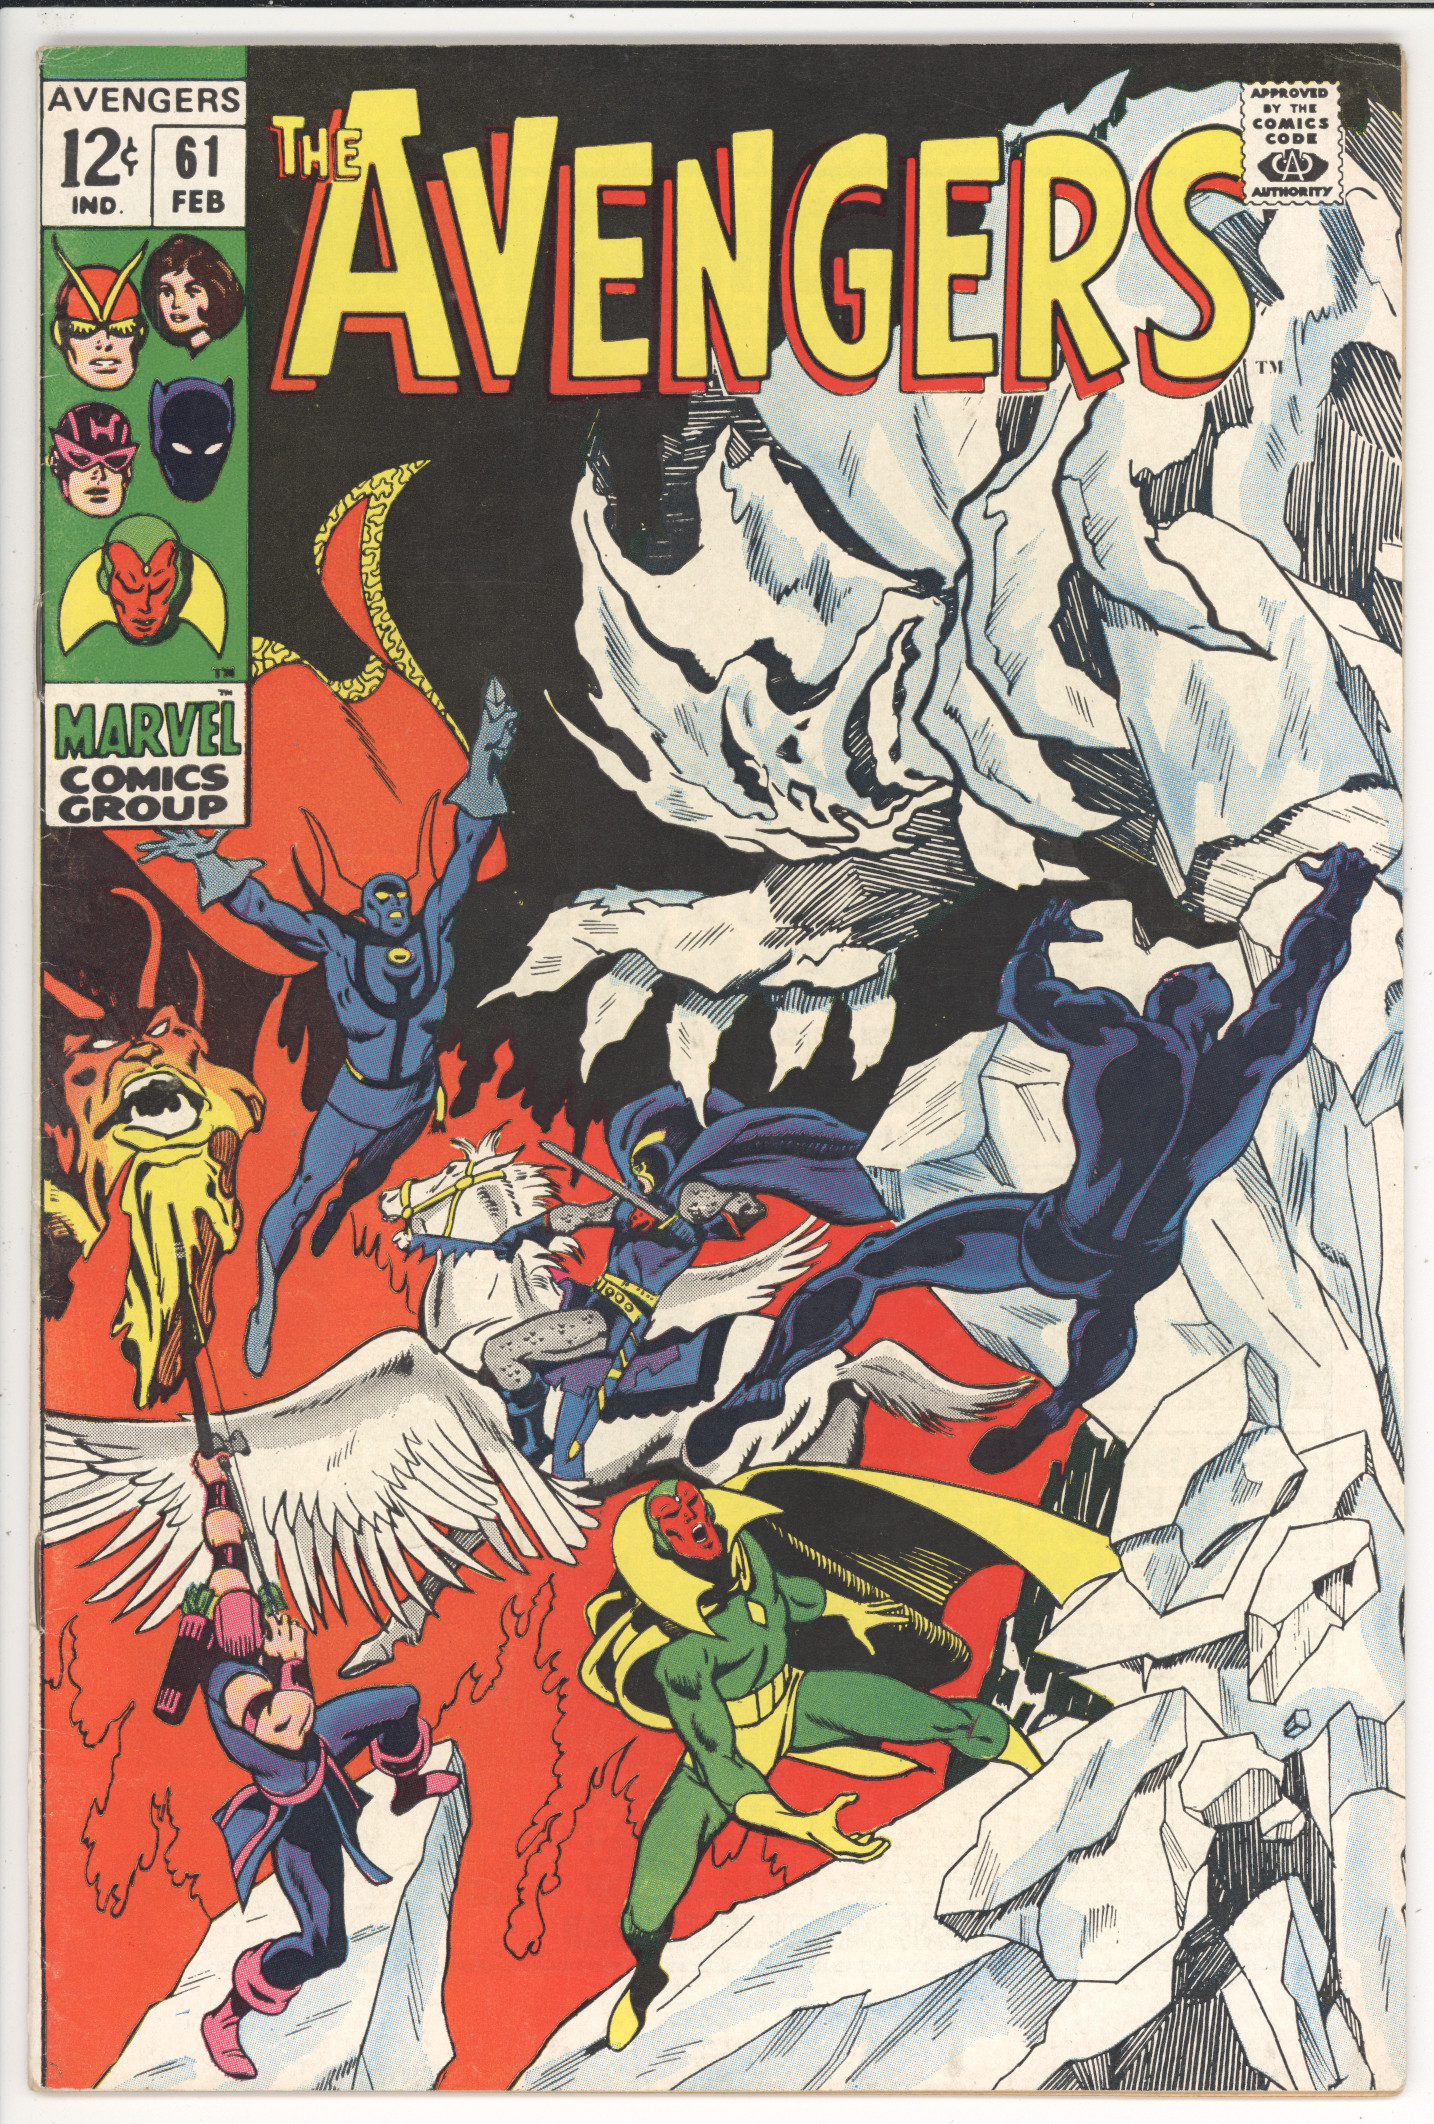 Avengers #61 front